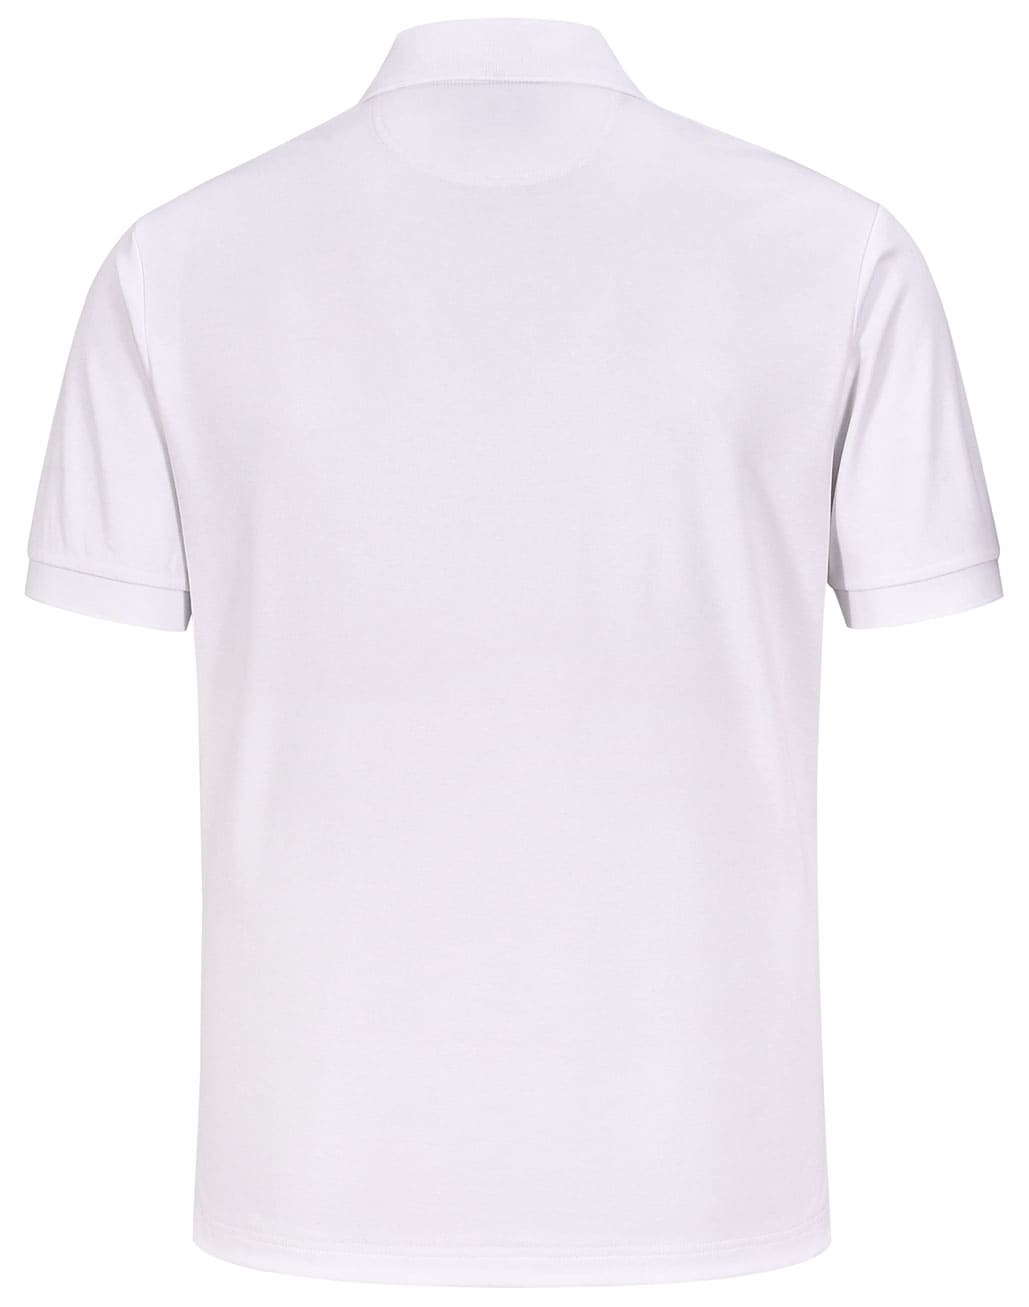 Custom Mens (Black) Corporate Branded Polo Shirts Ribbed Style Collar Online Perth Australia